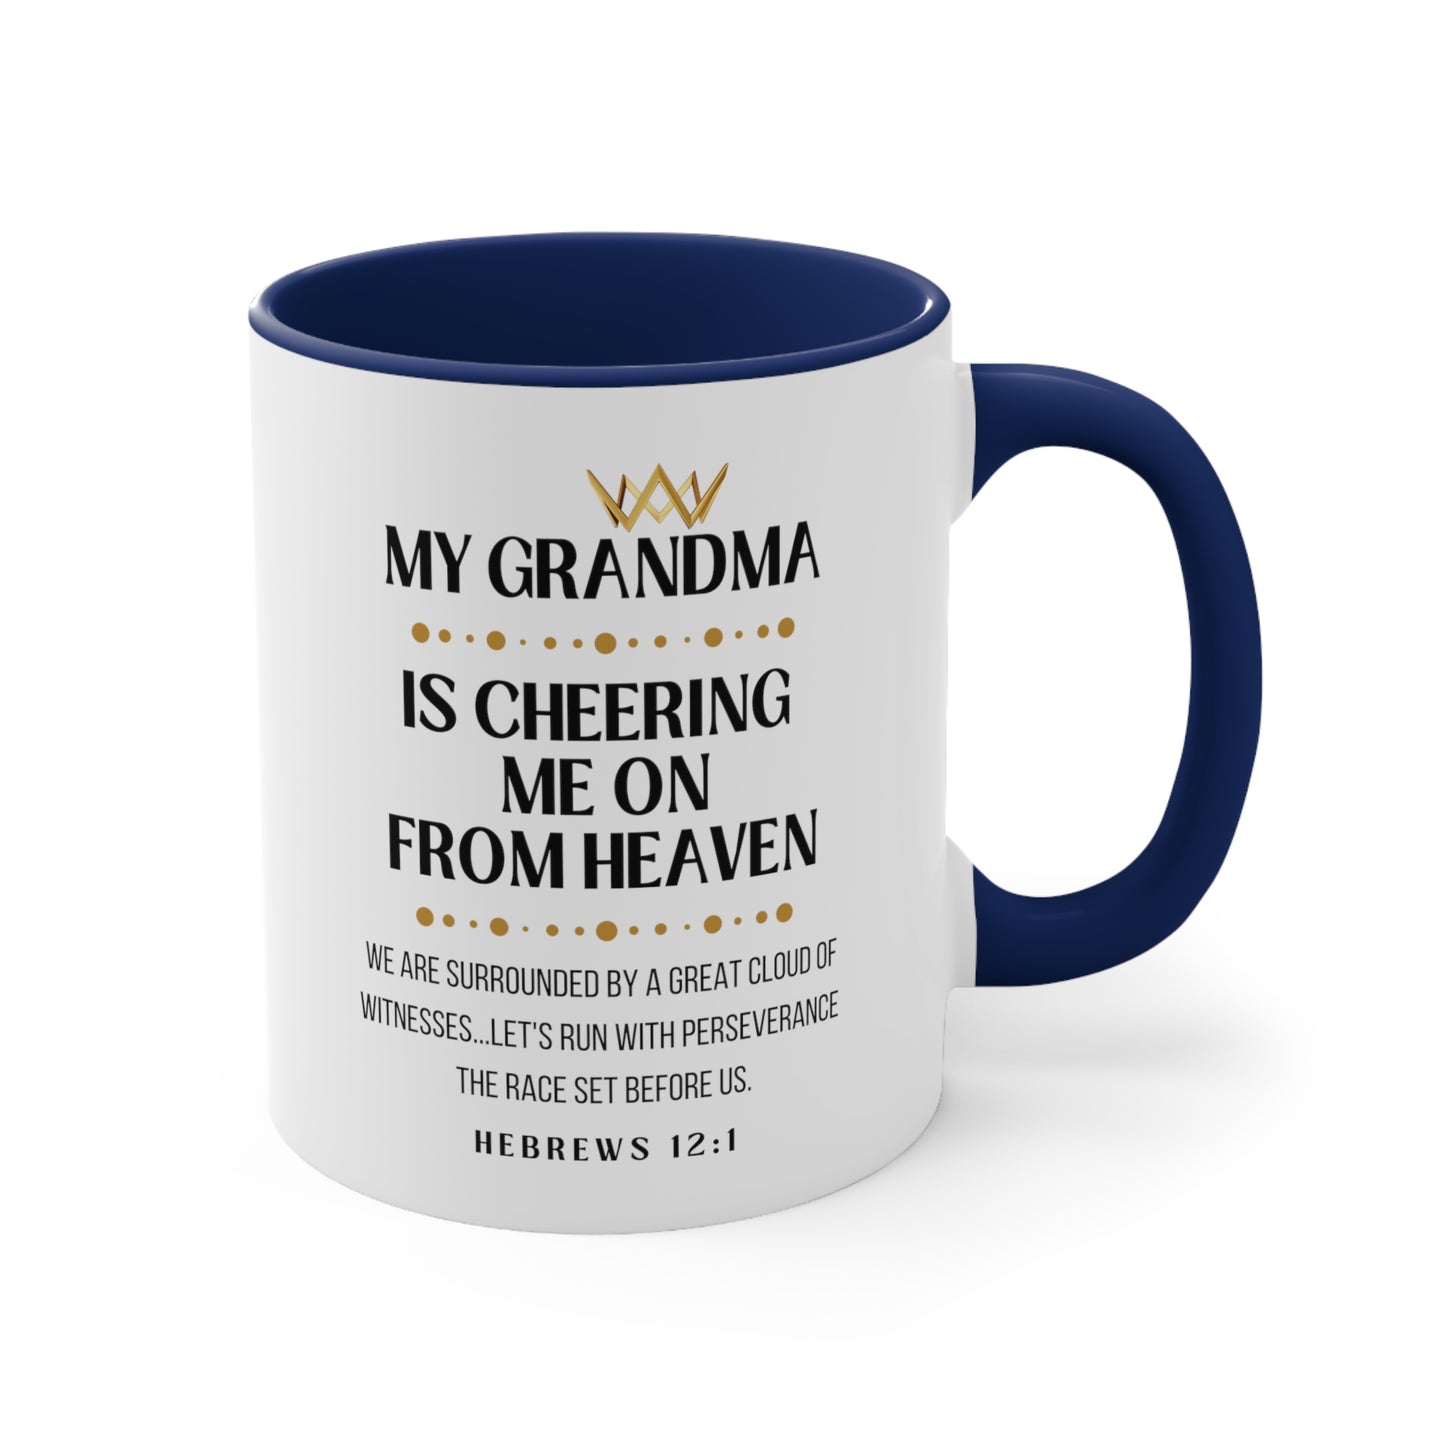 Grandma Memorial Gift Mug, Cheering Me On From Heaven